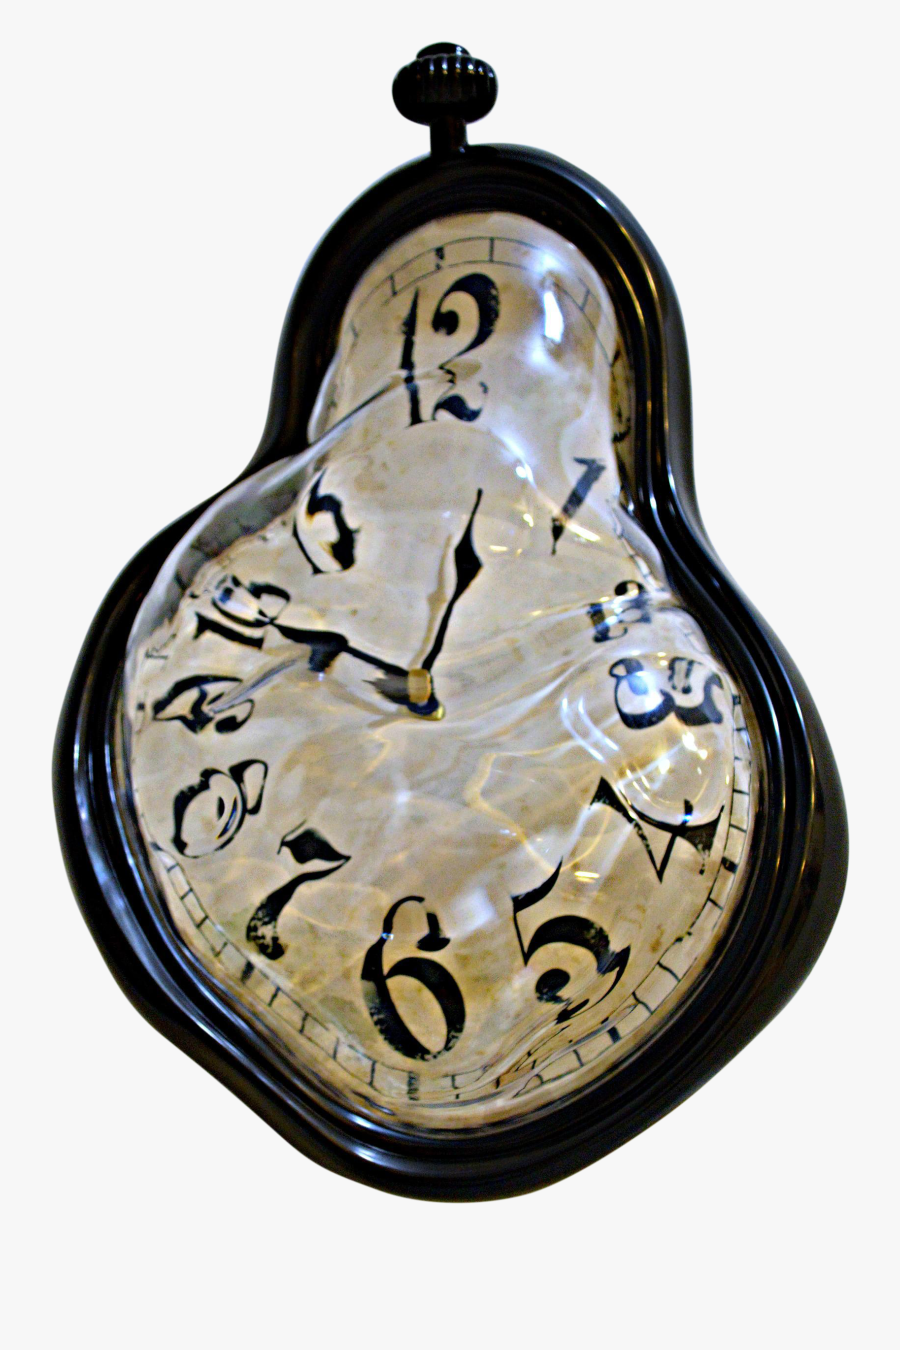 Transparent Melting Clock Clipart - Transparent Melting Clocks, Transparent Clipart